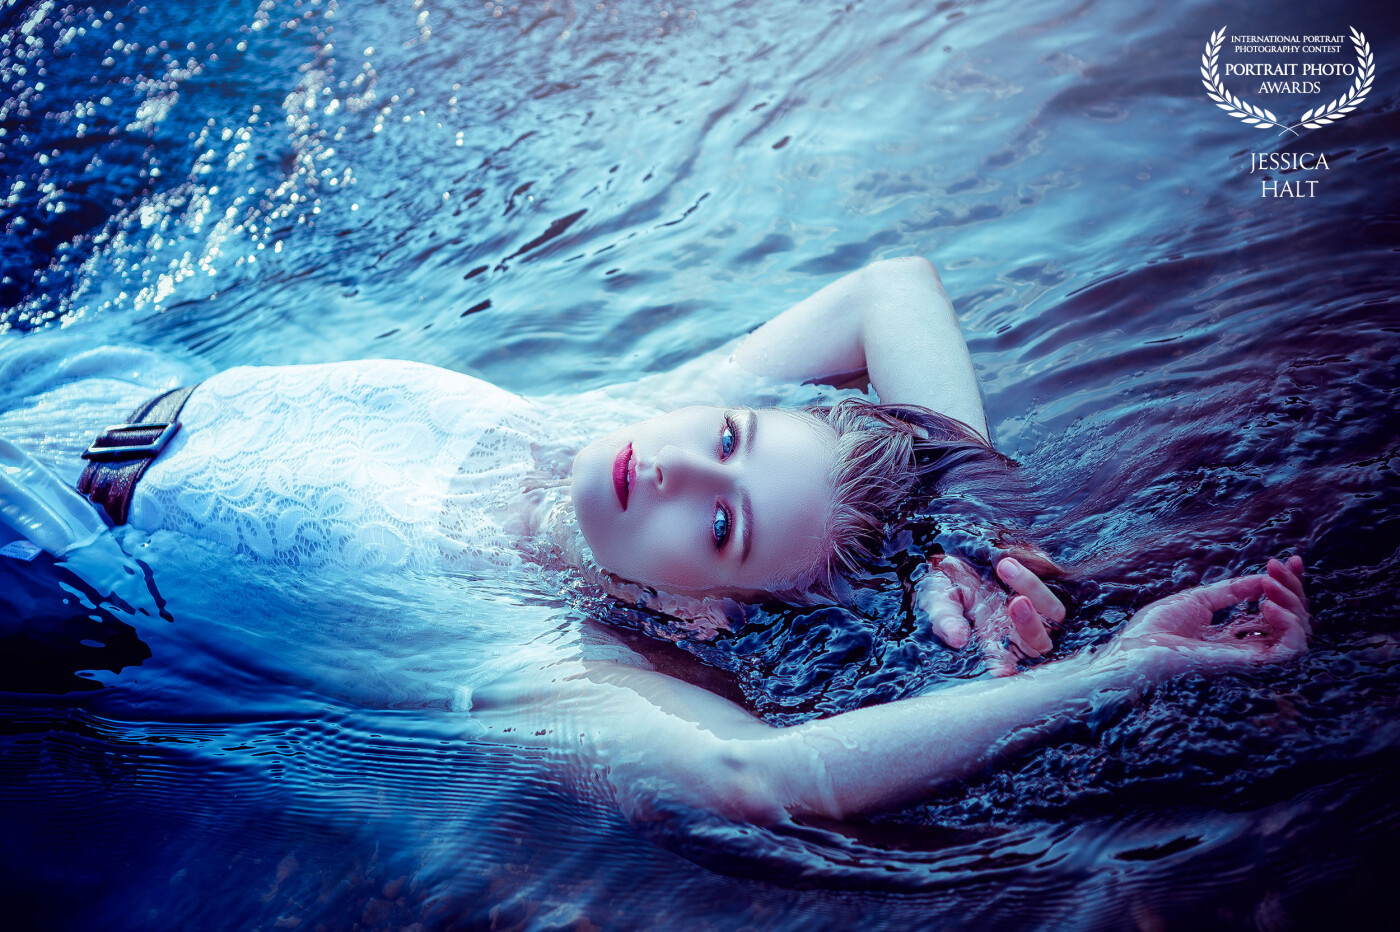 Dark Water photoshoot with Johanna